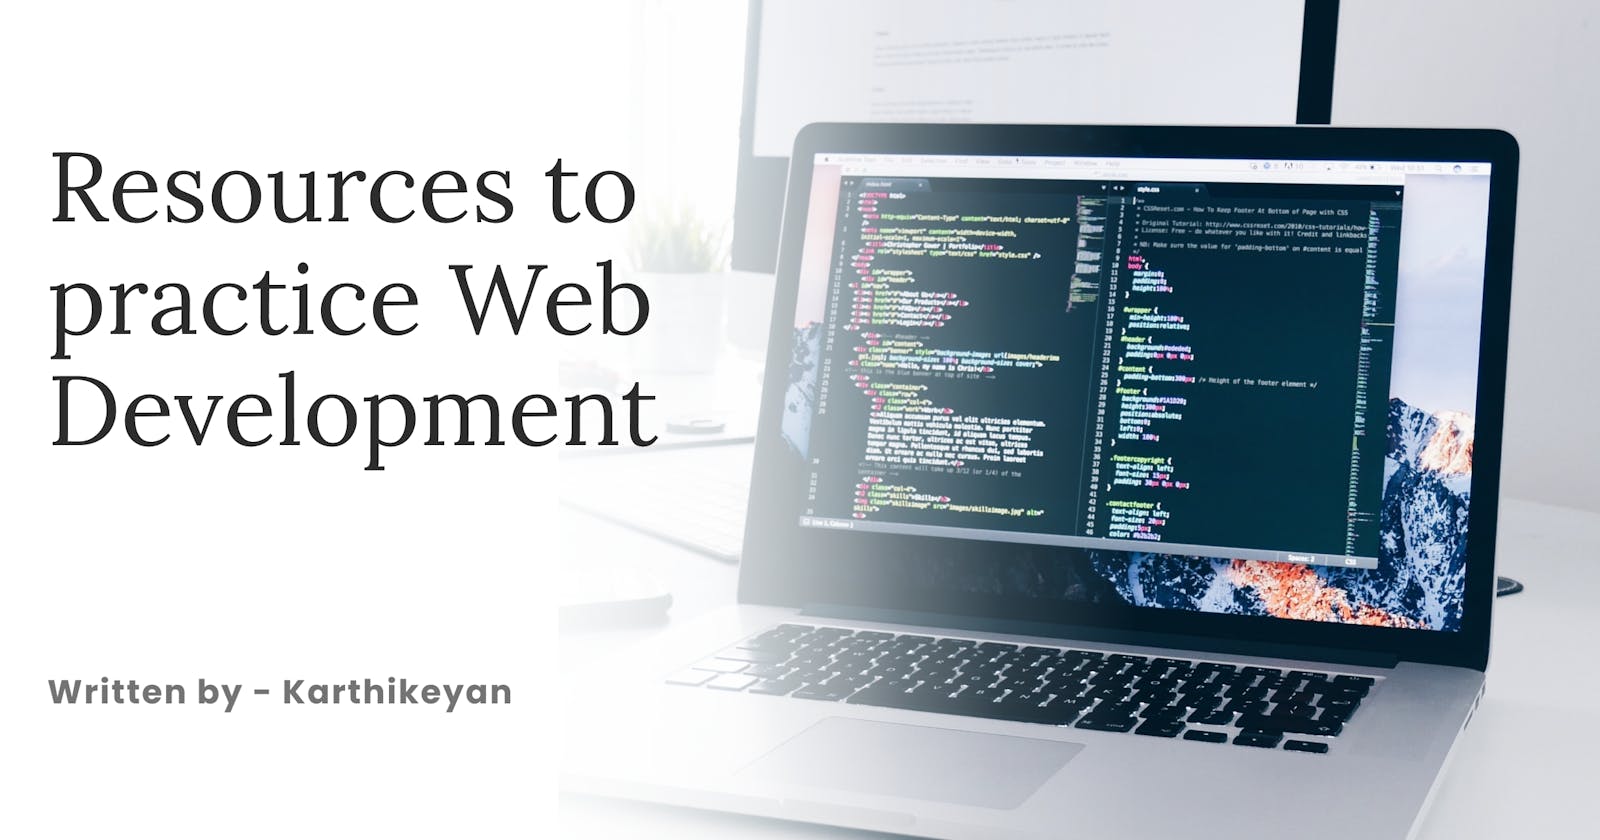 Resources to practice web development